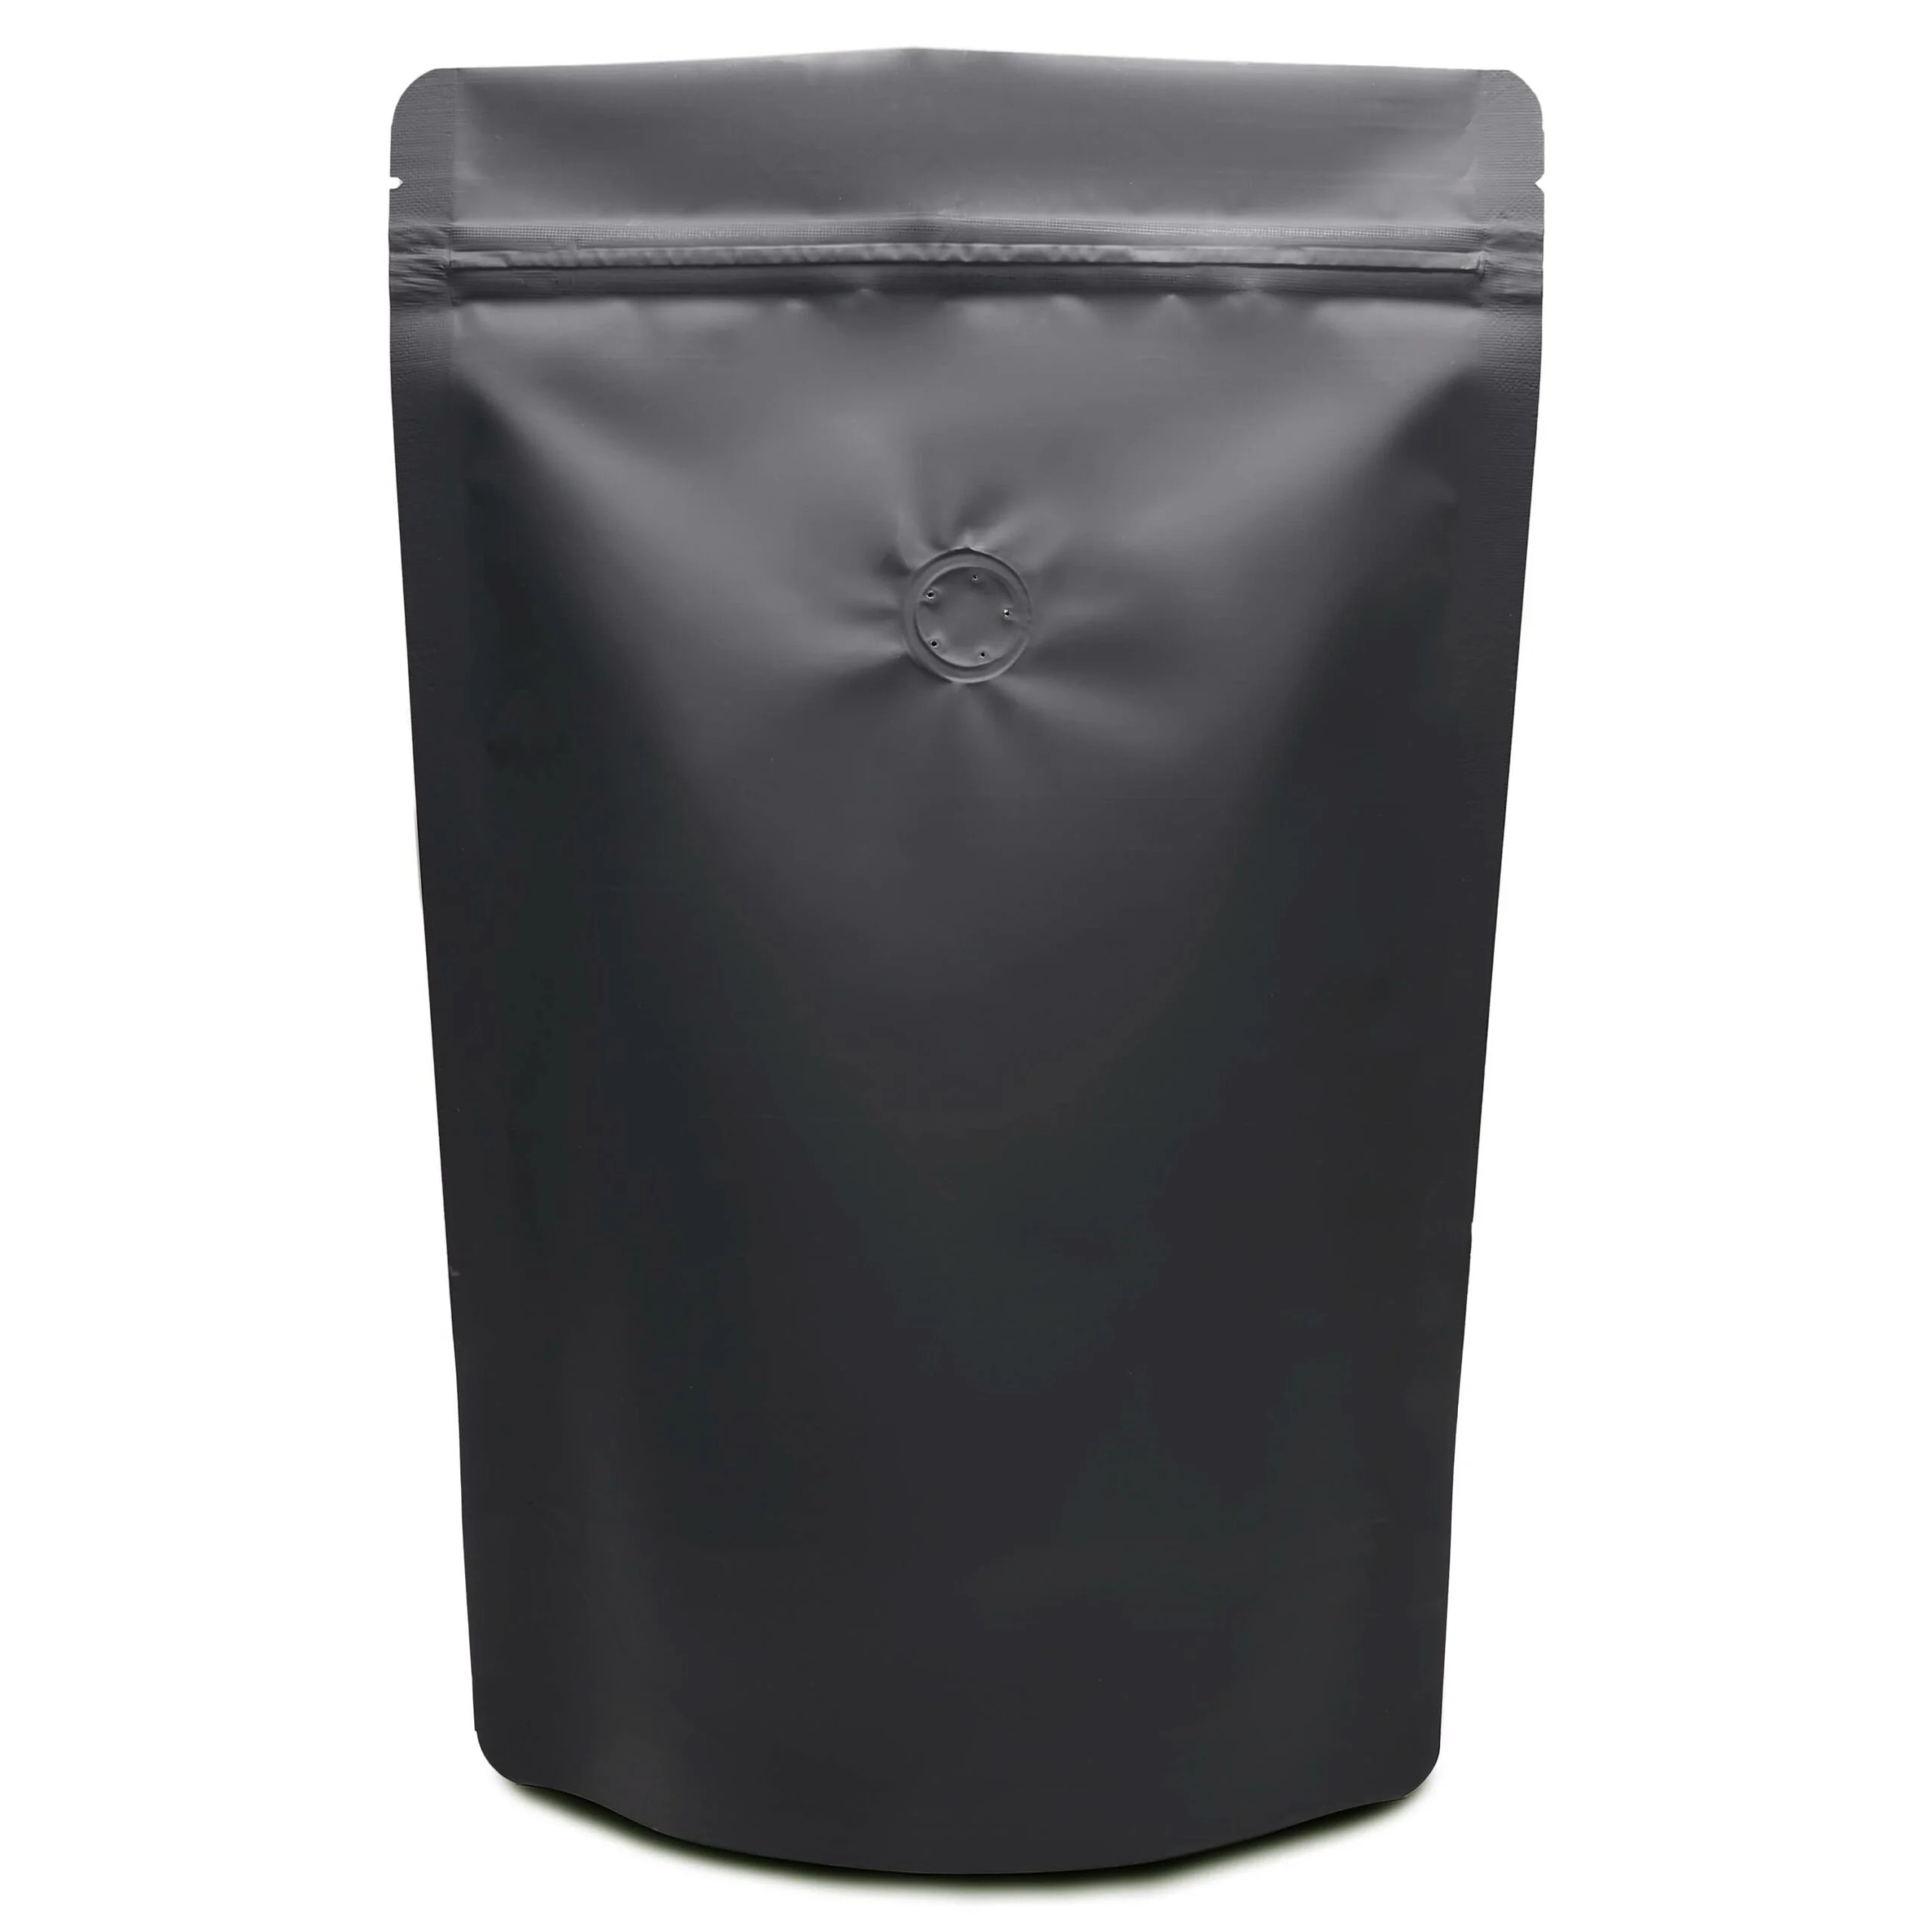 Tea Pockets (Tea Bags) Biodegradable 60 Count